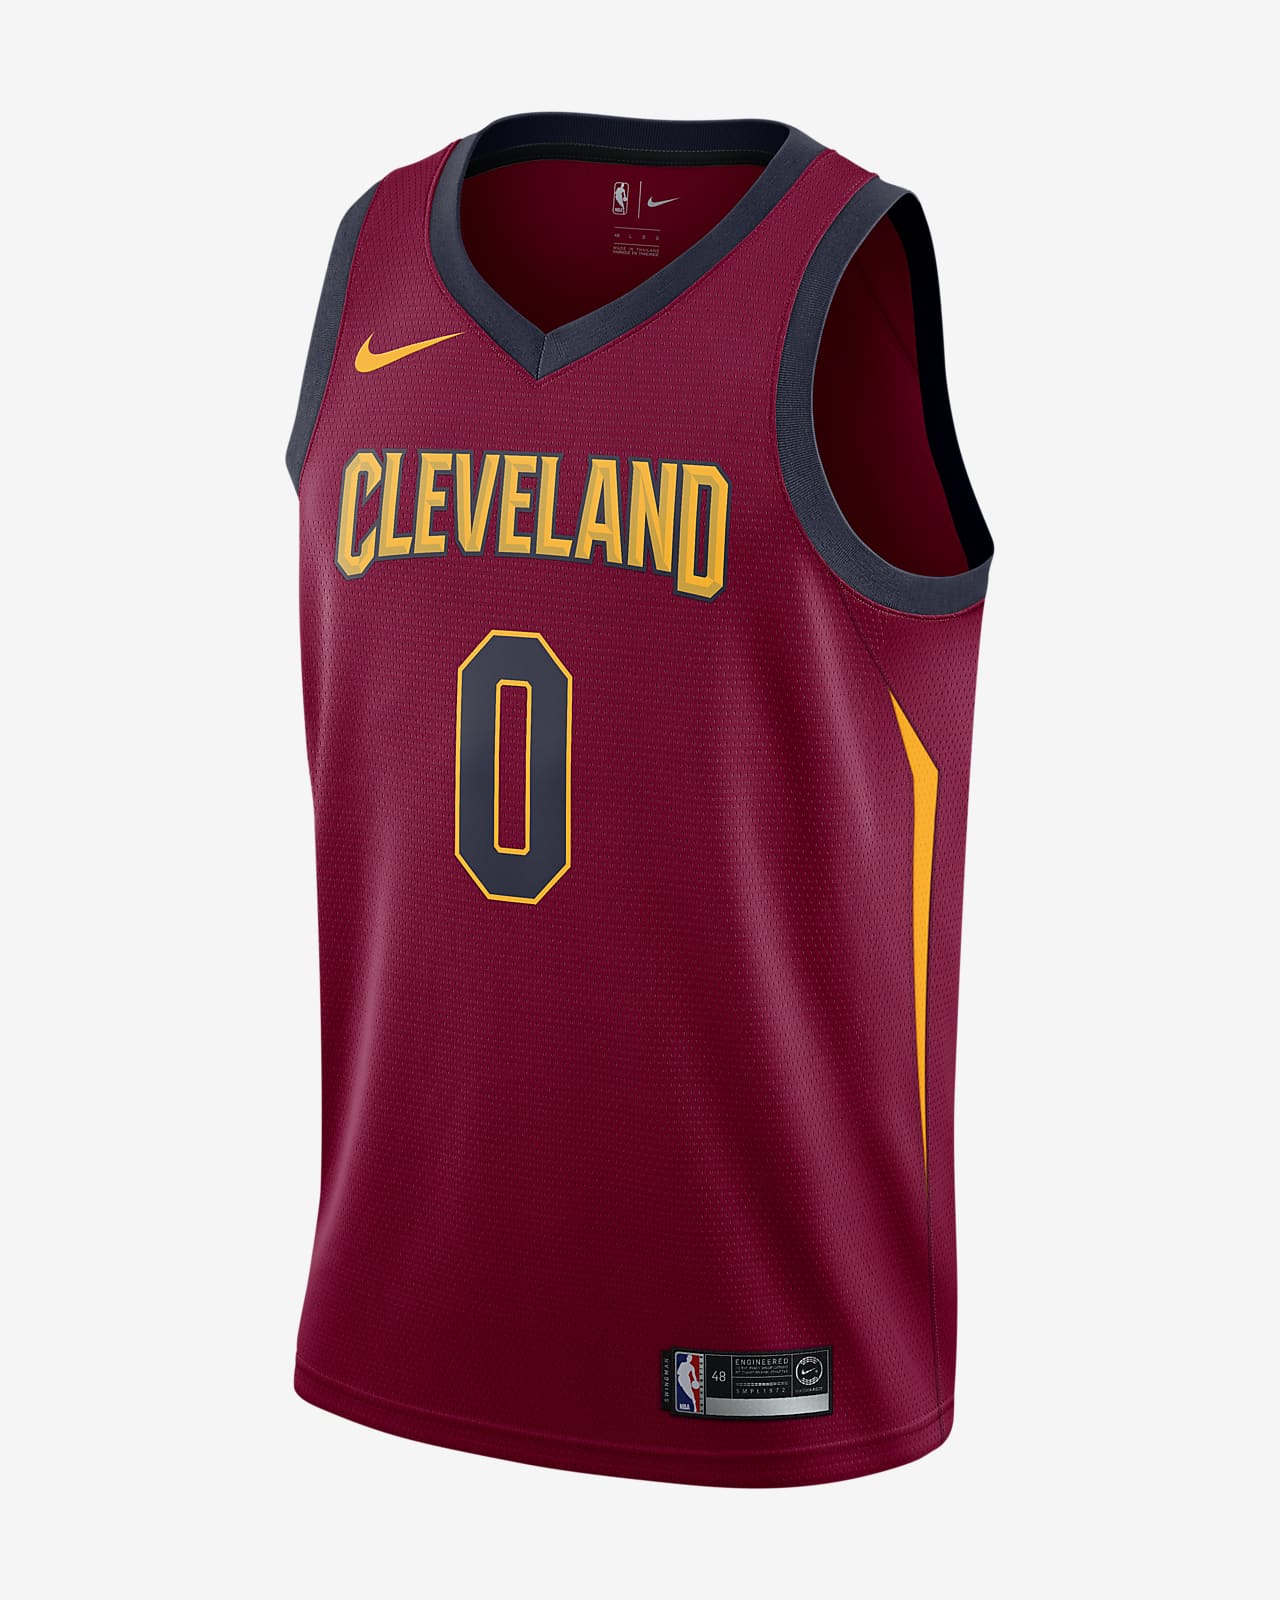 Camisetas Cleveland Cavaliers Hot Sale, 57%.